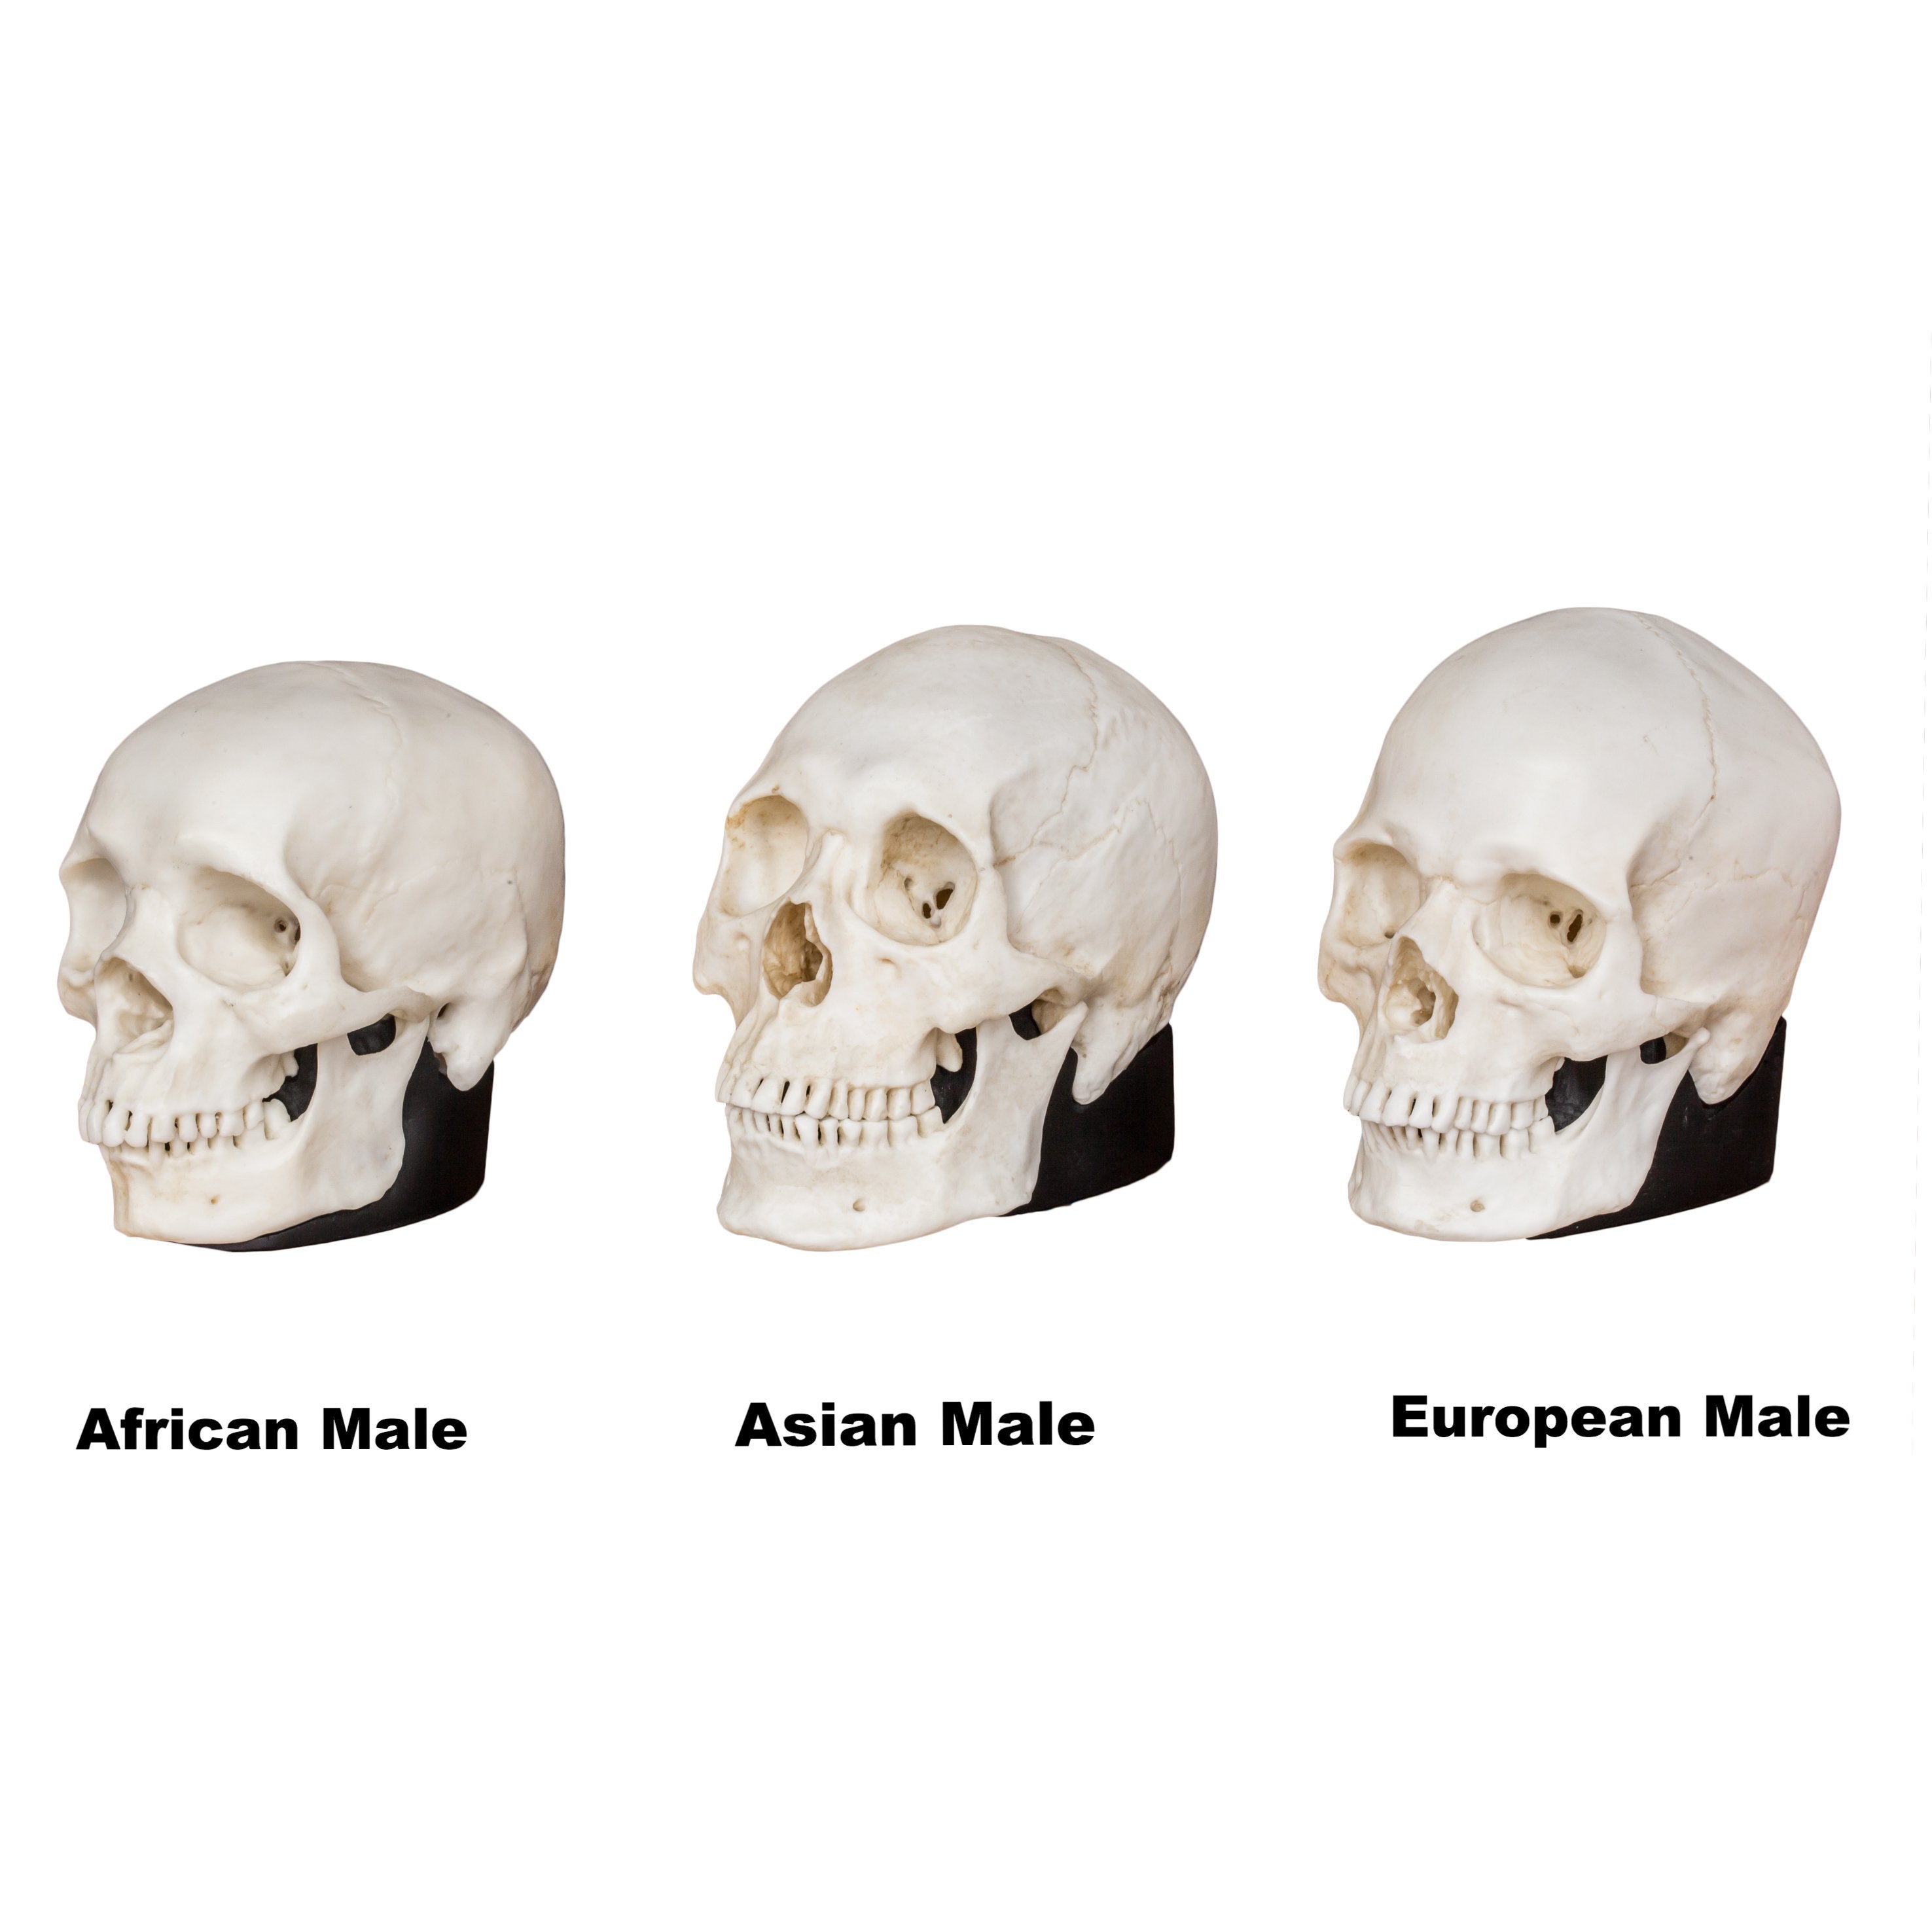 Human Male European Skull - Bone Clones, Inc. - Osteological Reproductions